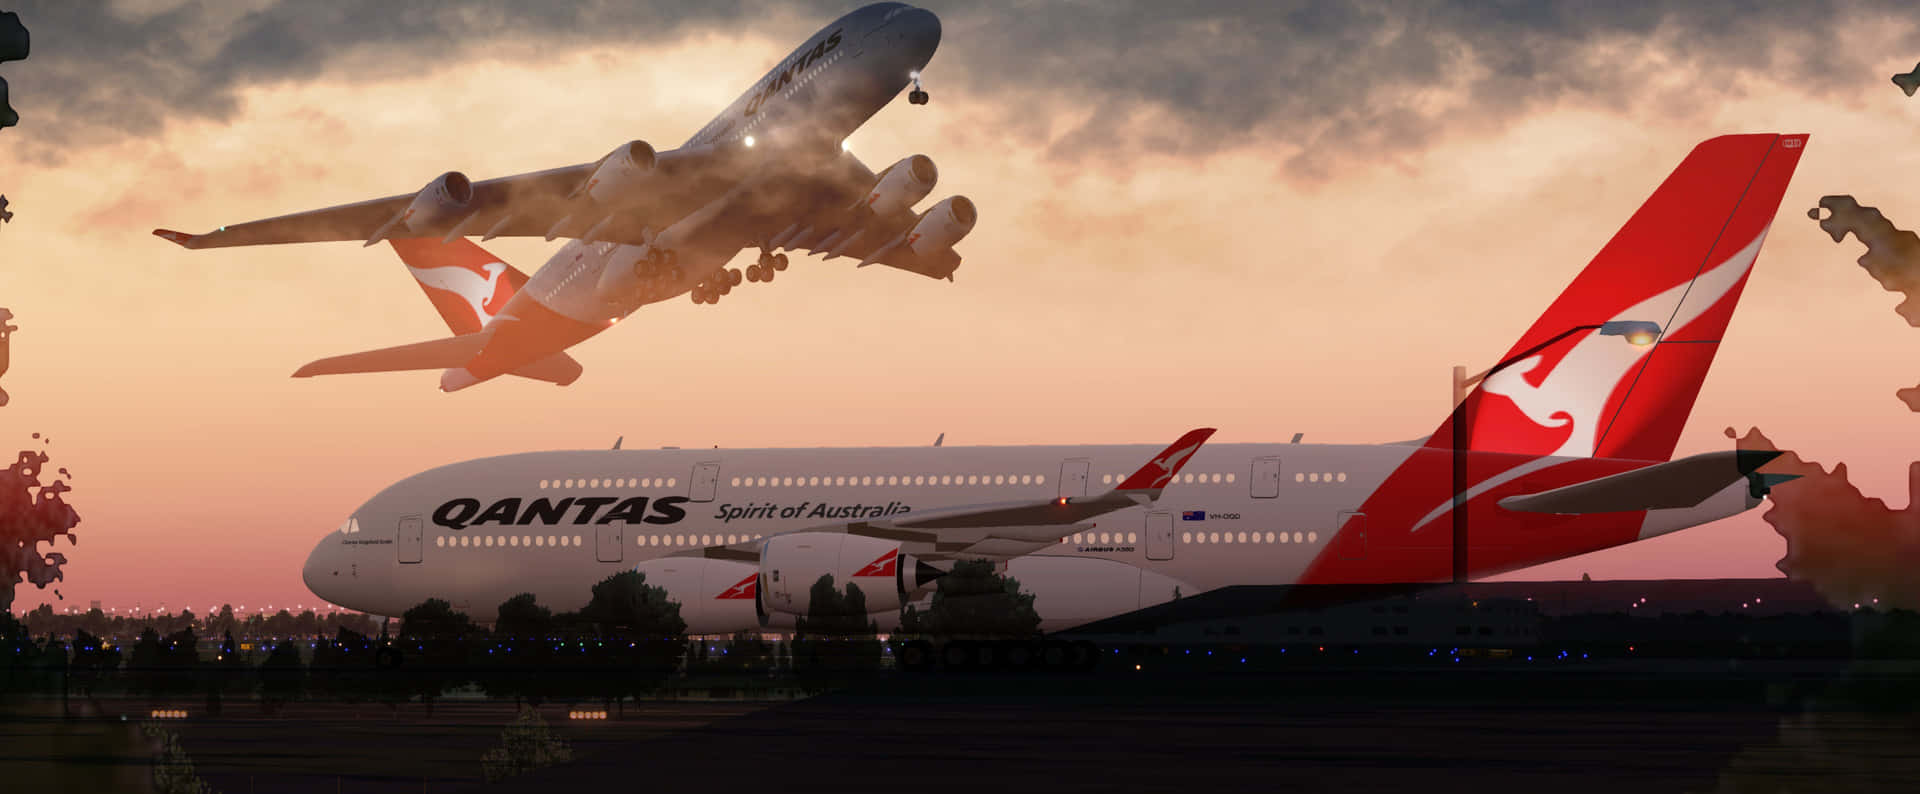 Qantas Airways Boeing 747 Planes 4K Ultra HD Wallpaper